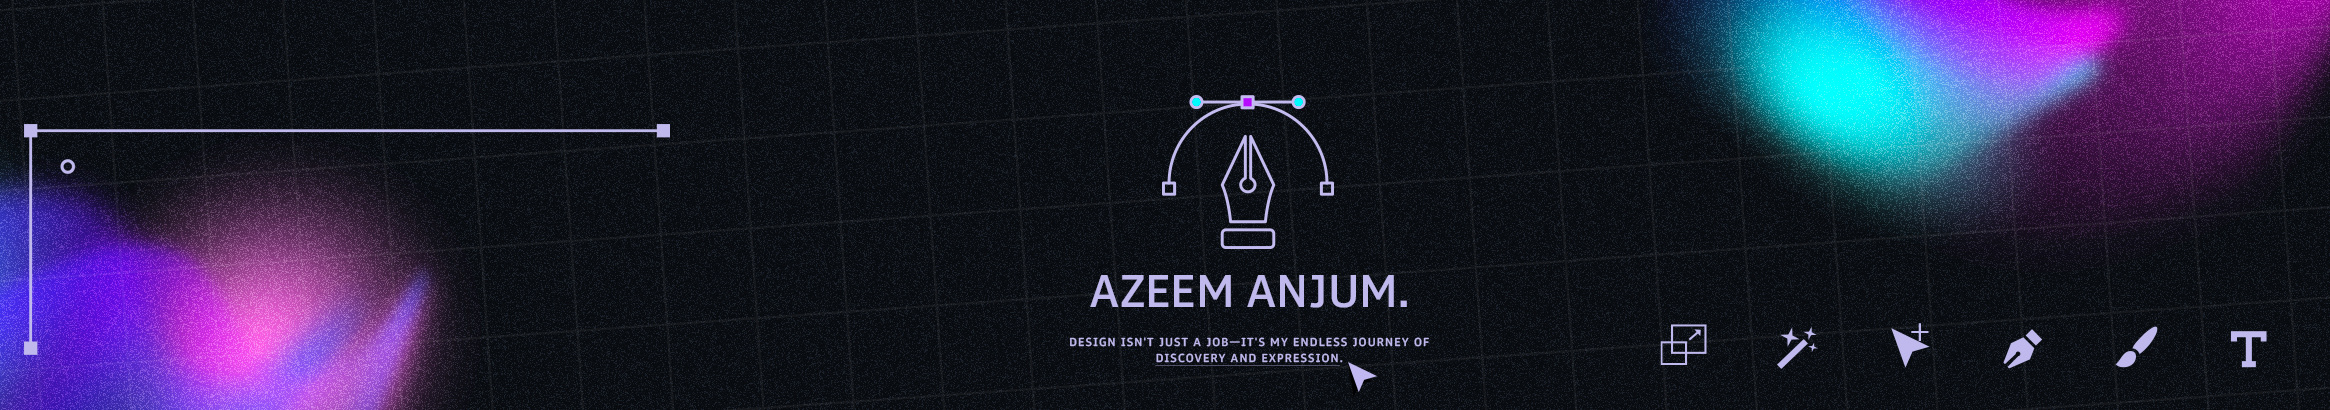 Azeem Anjum 🏆's profile banner